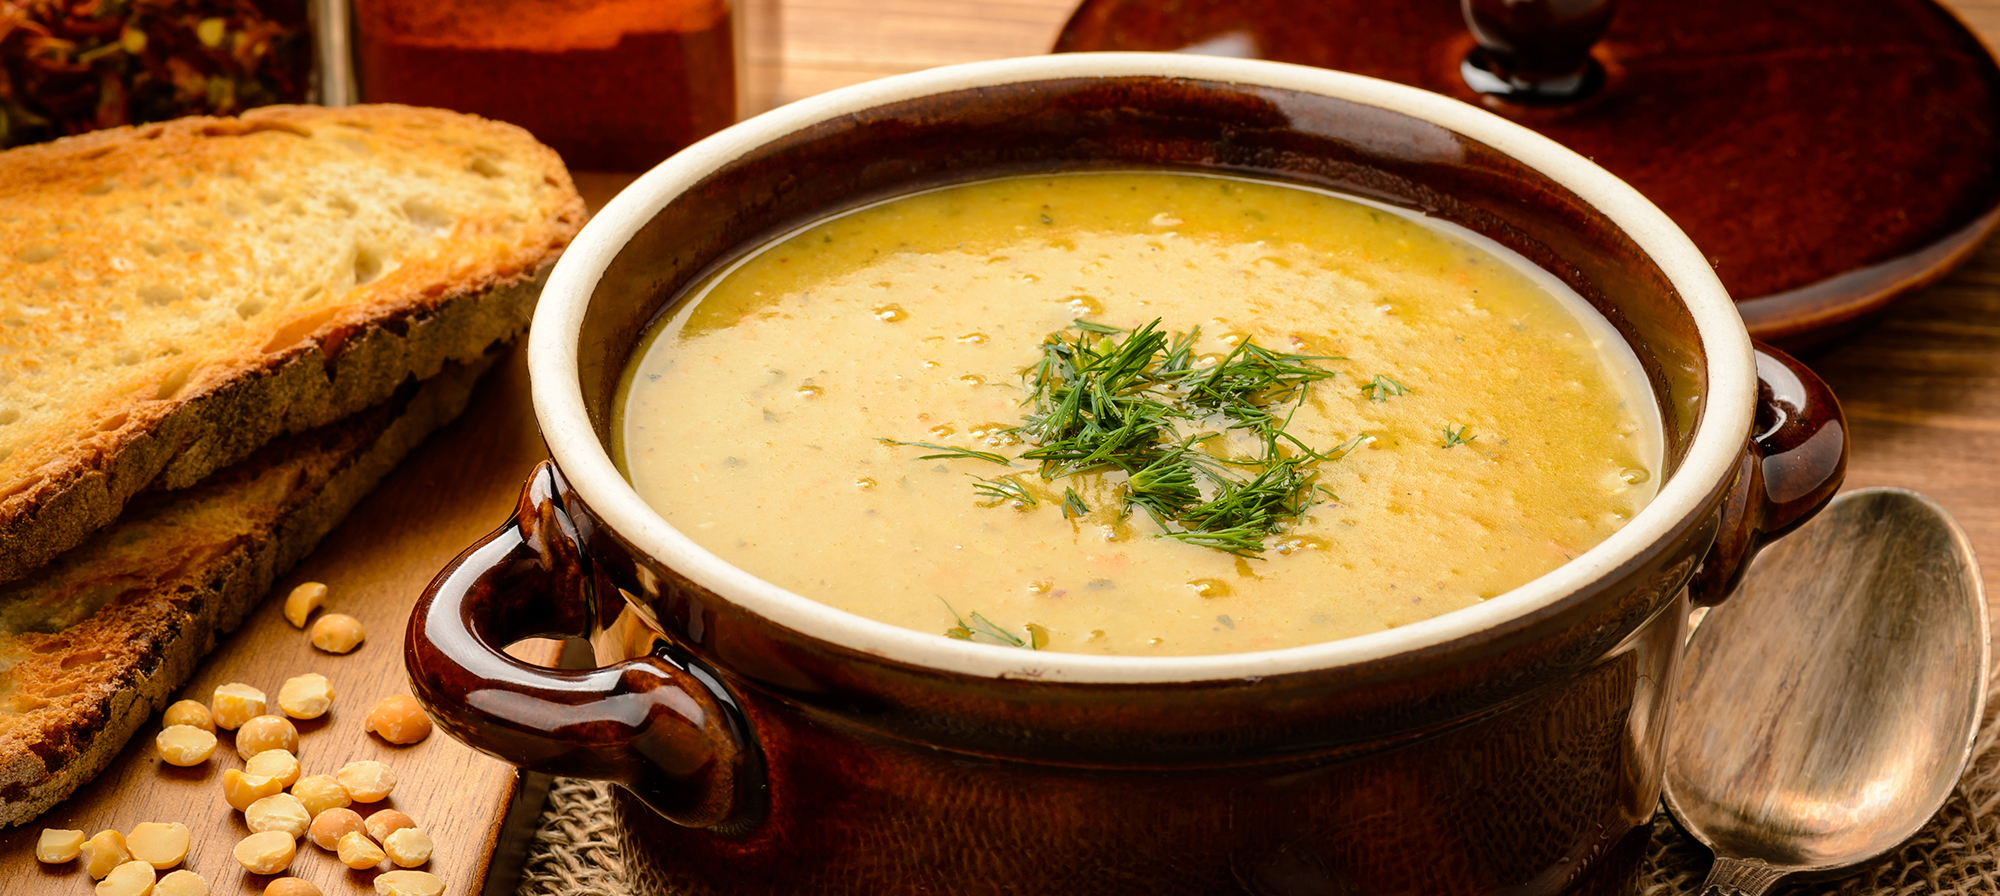 Split Pea Soup: A Warm Bowl of Nutritious Comfort Food